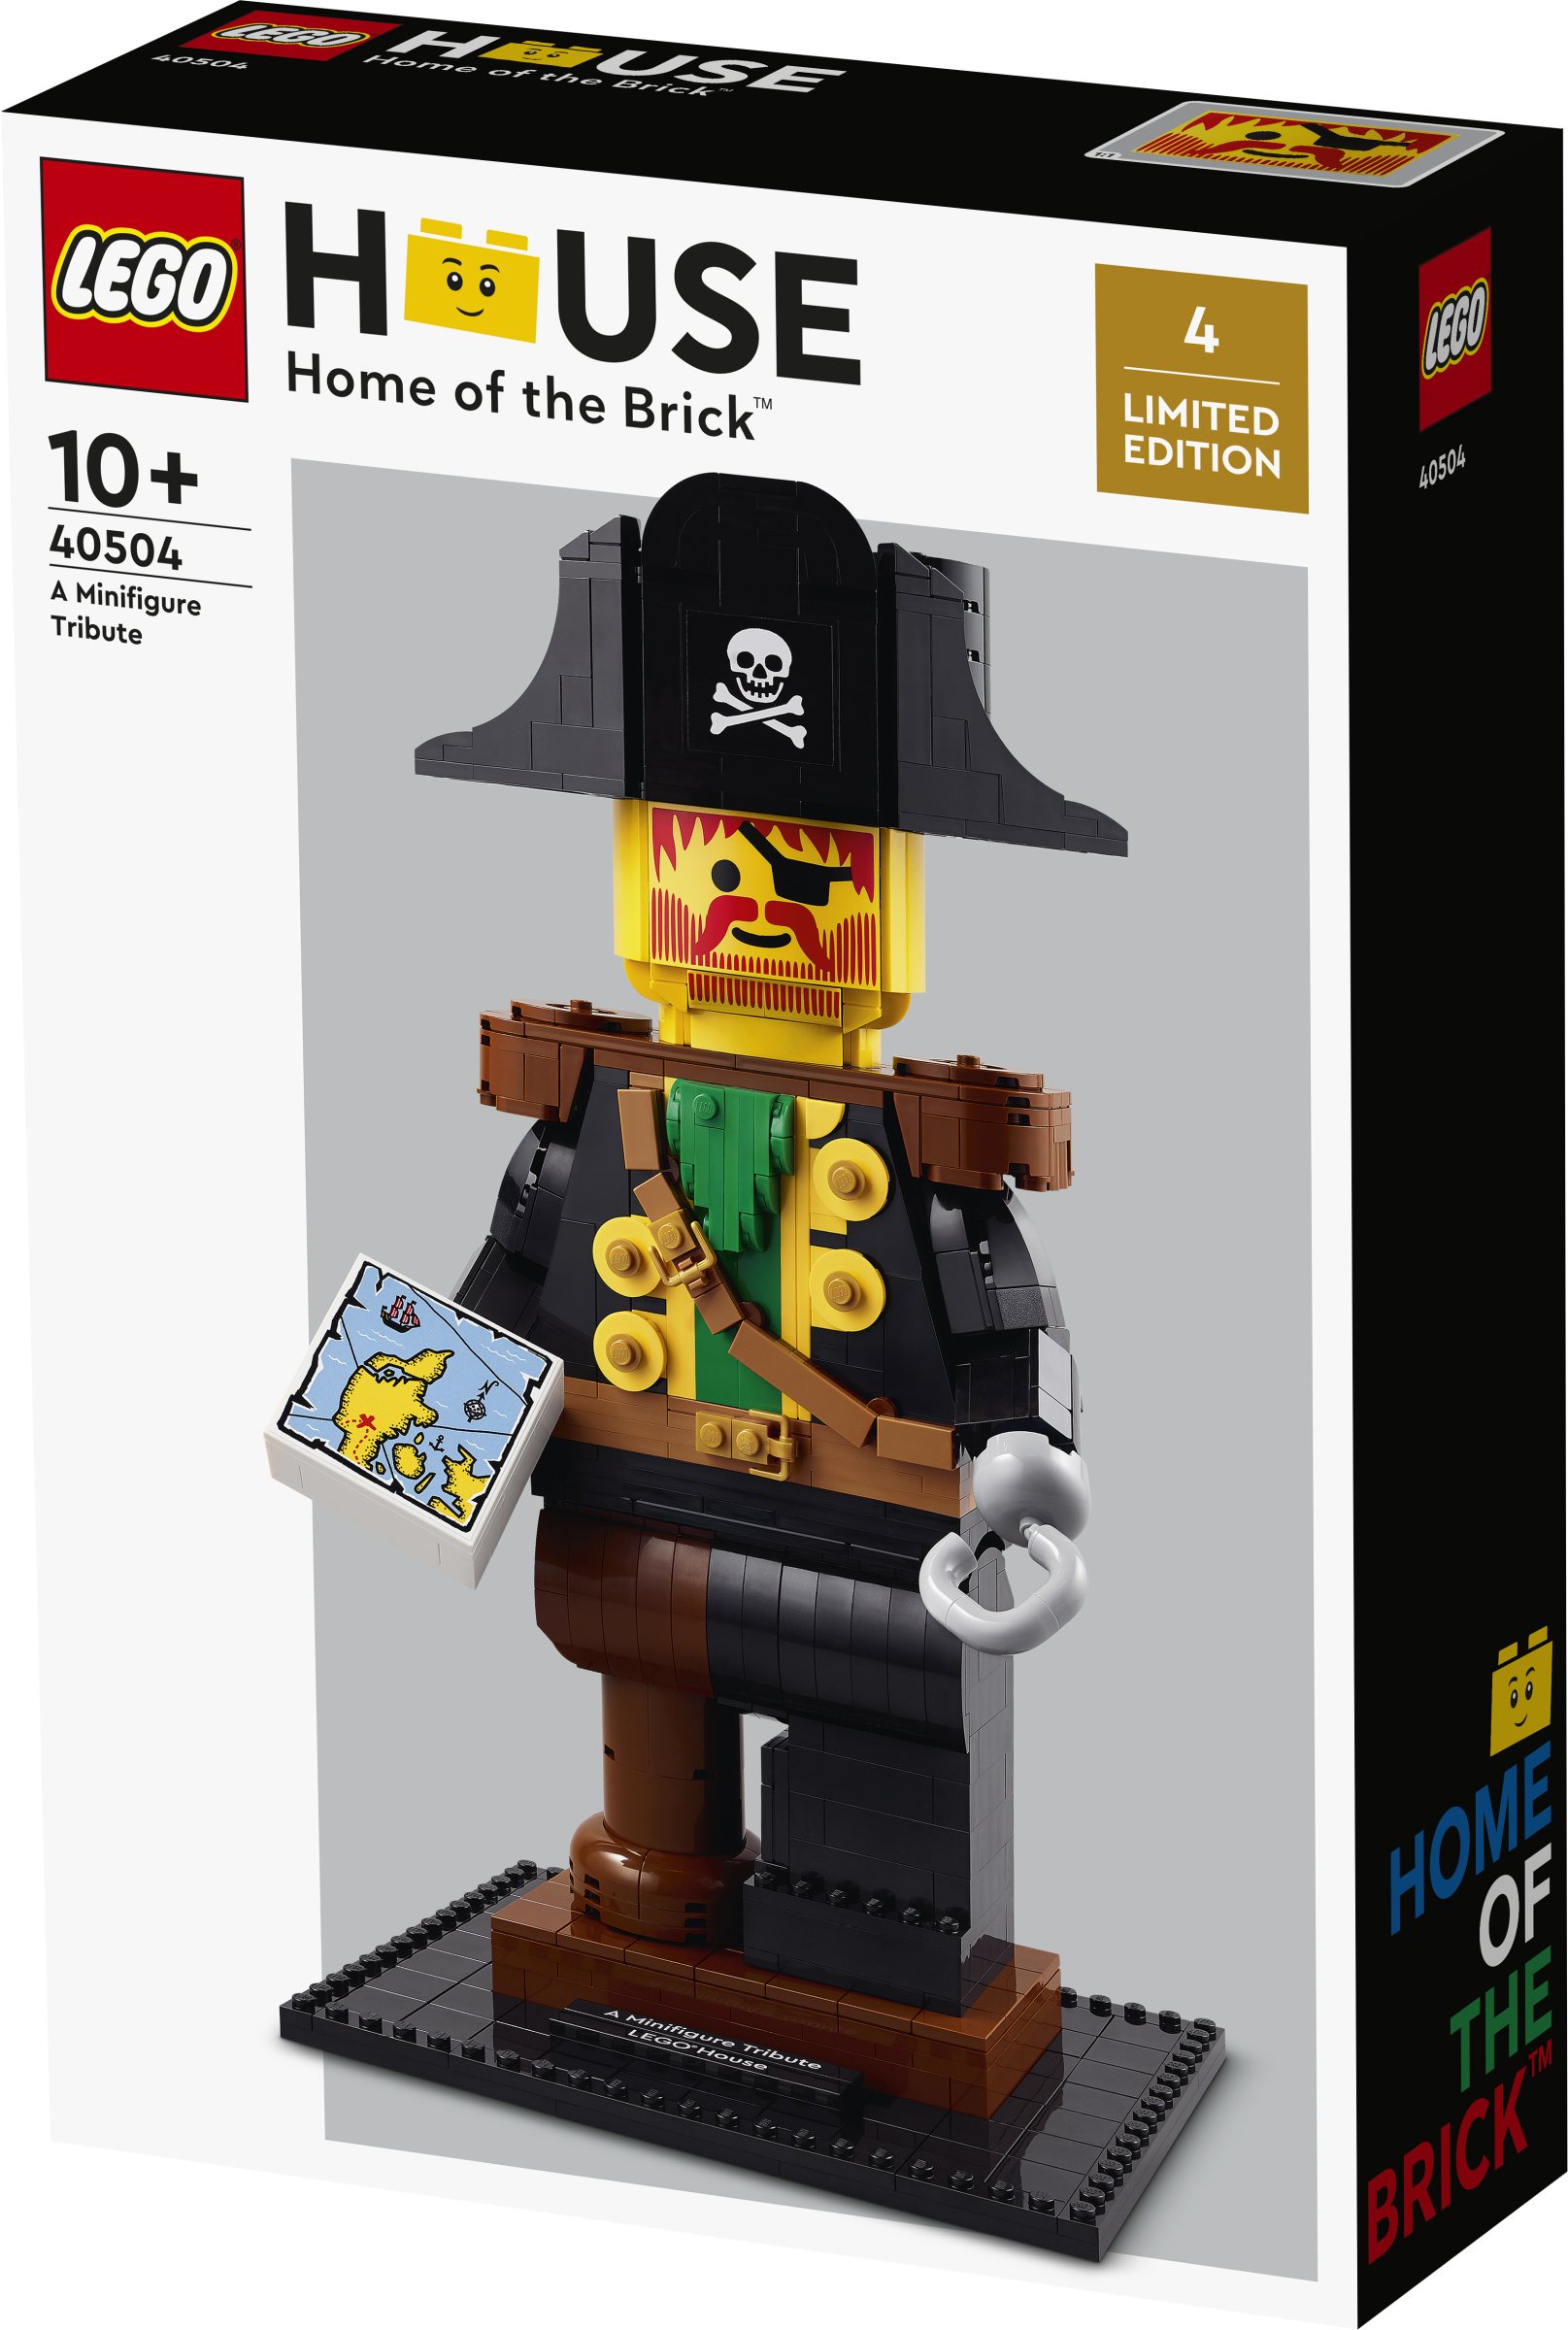 kok intellektuel pegs New LEGO House exclusive set revealed | Brickset